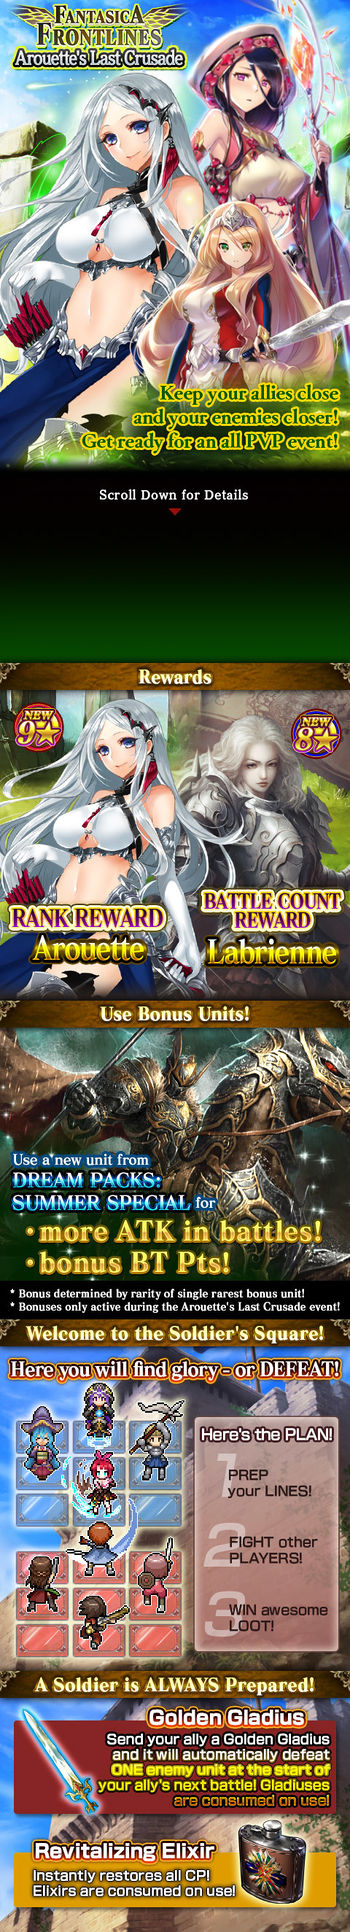 Arouettes Last Crusade release.jpg